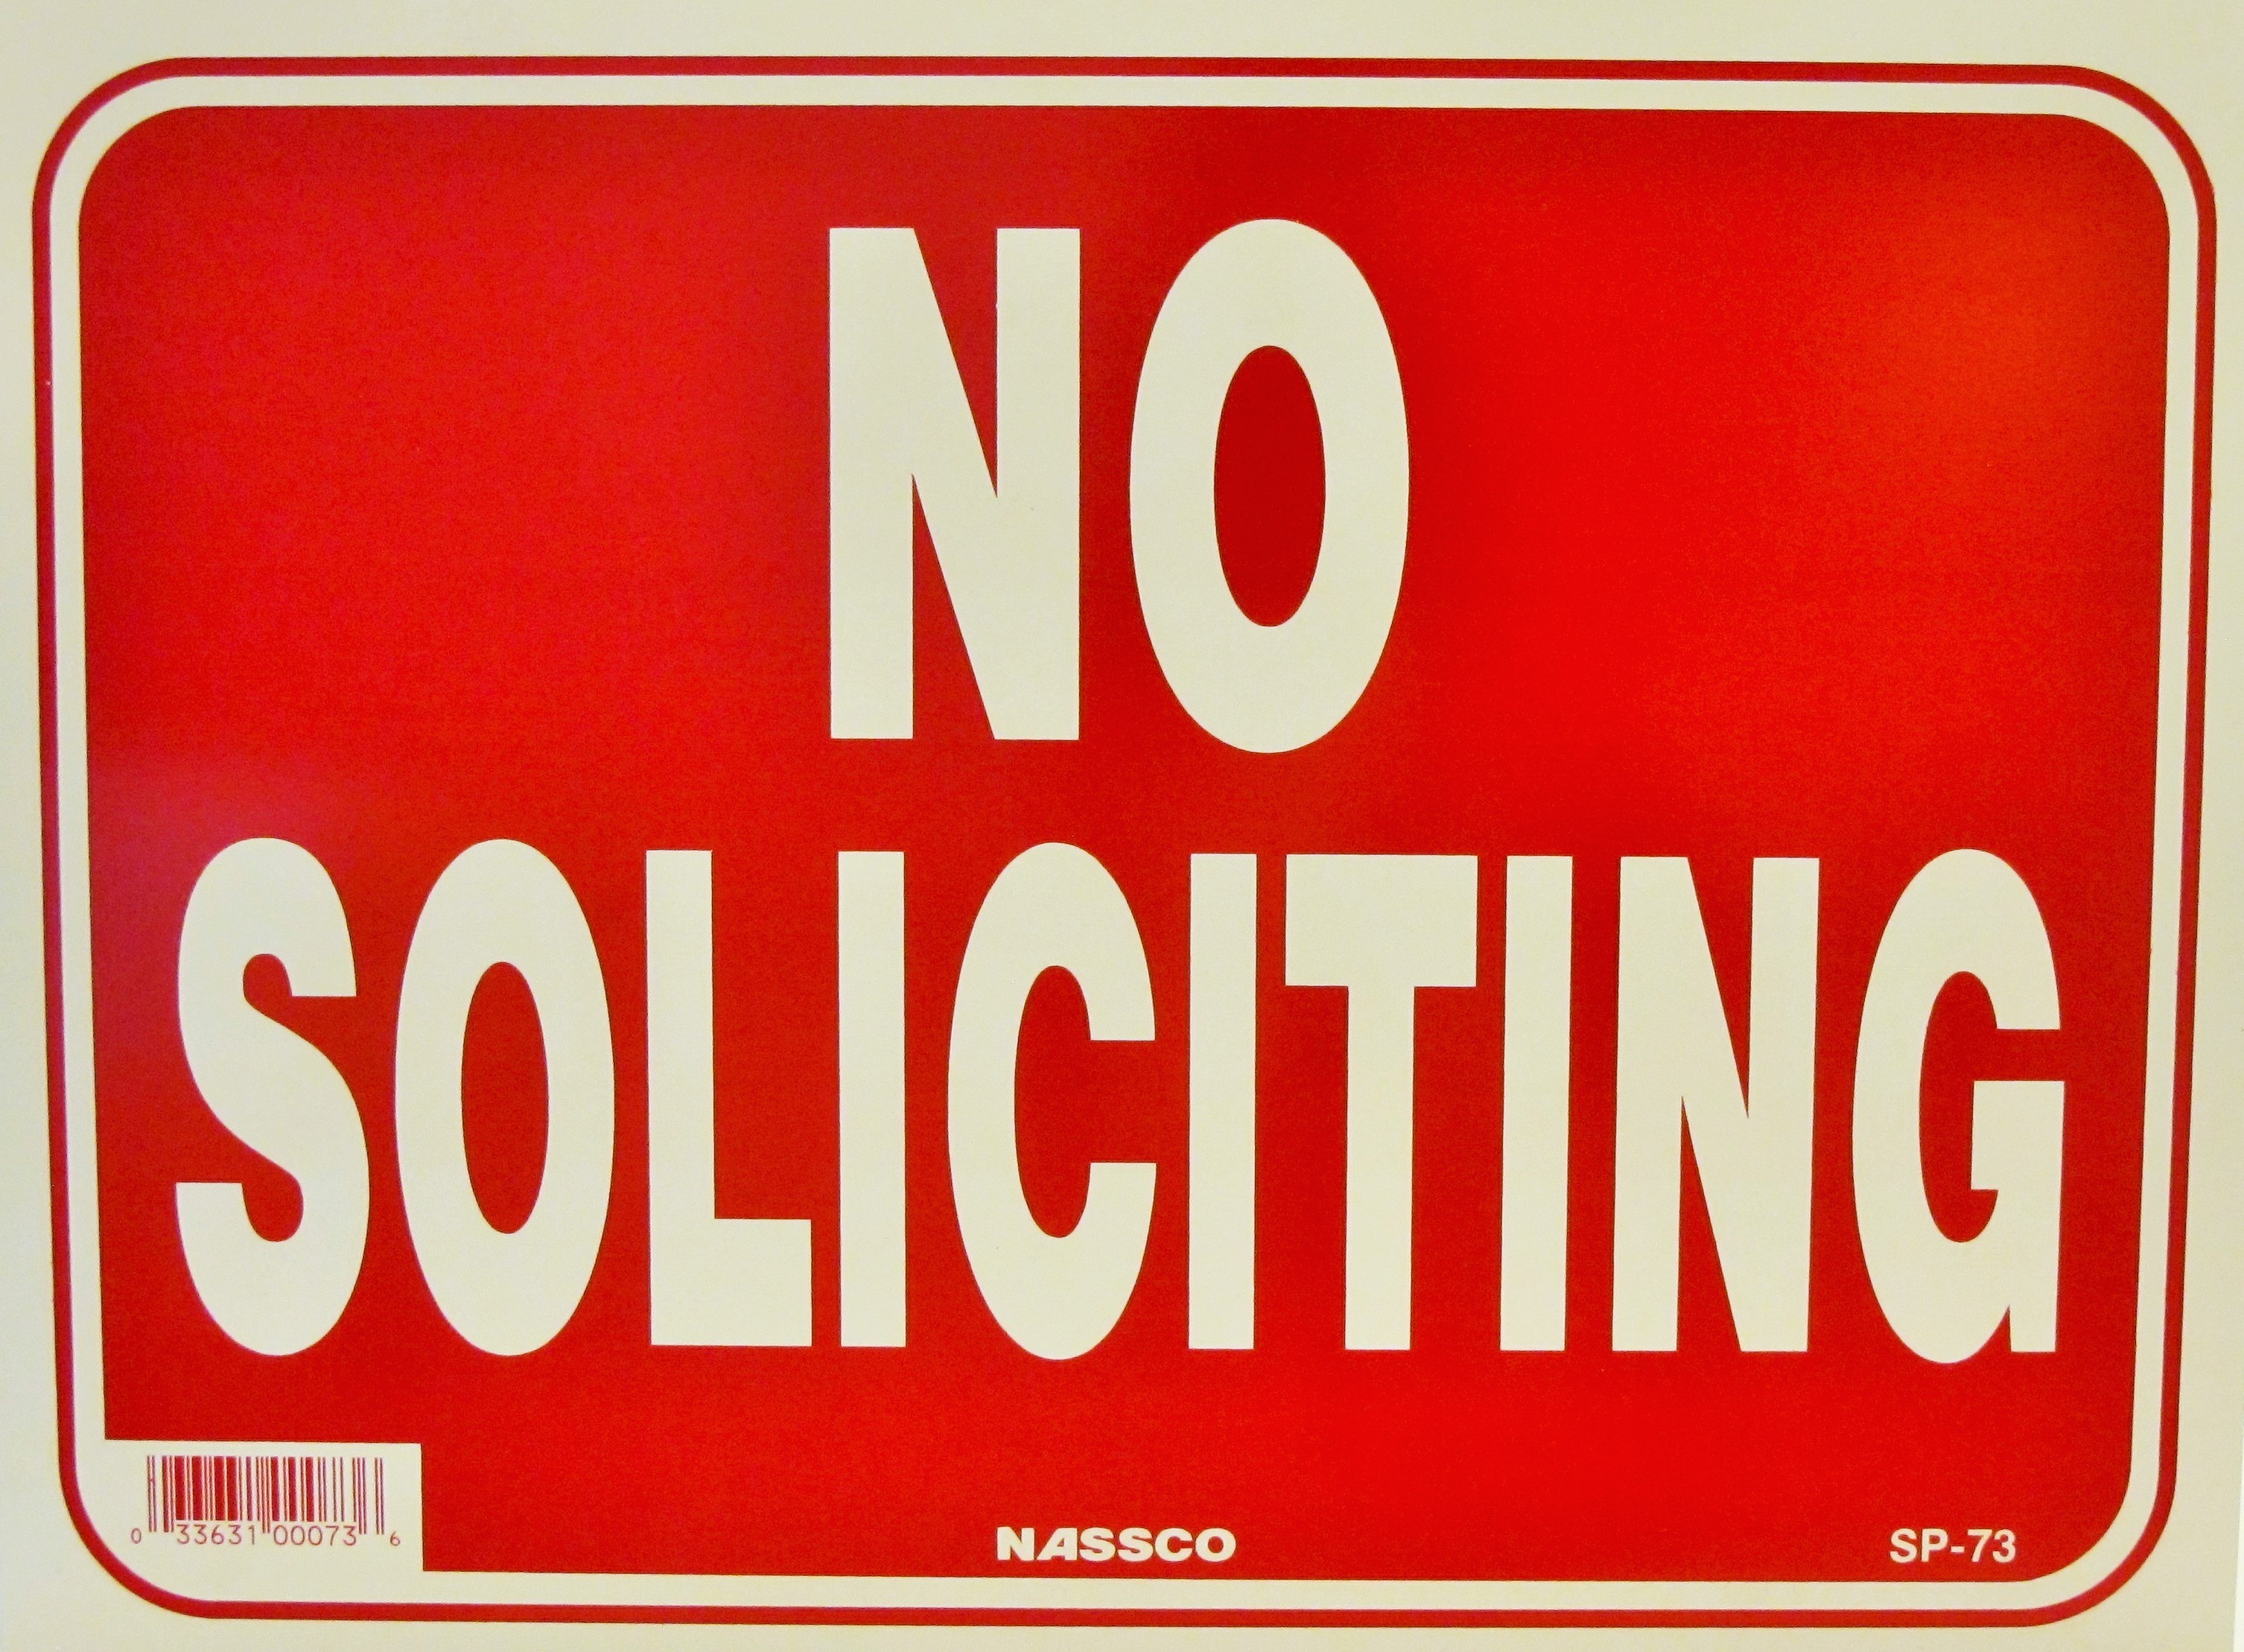 No Soliciting Sign